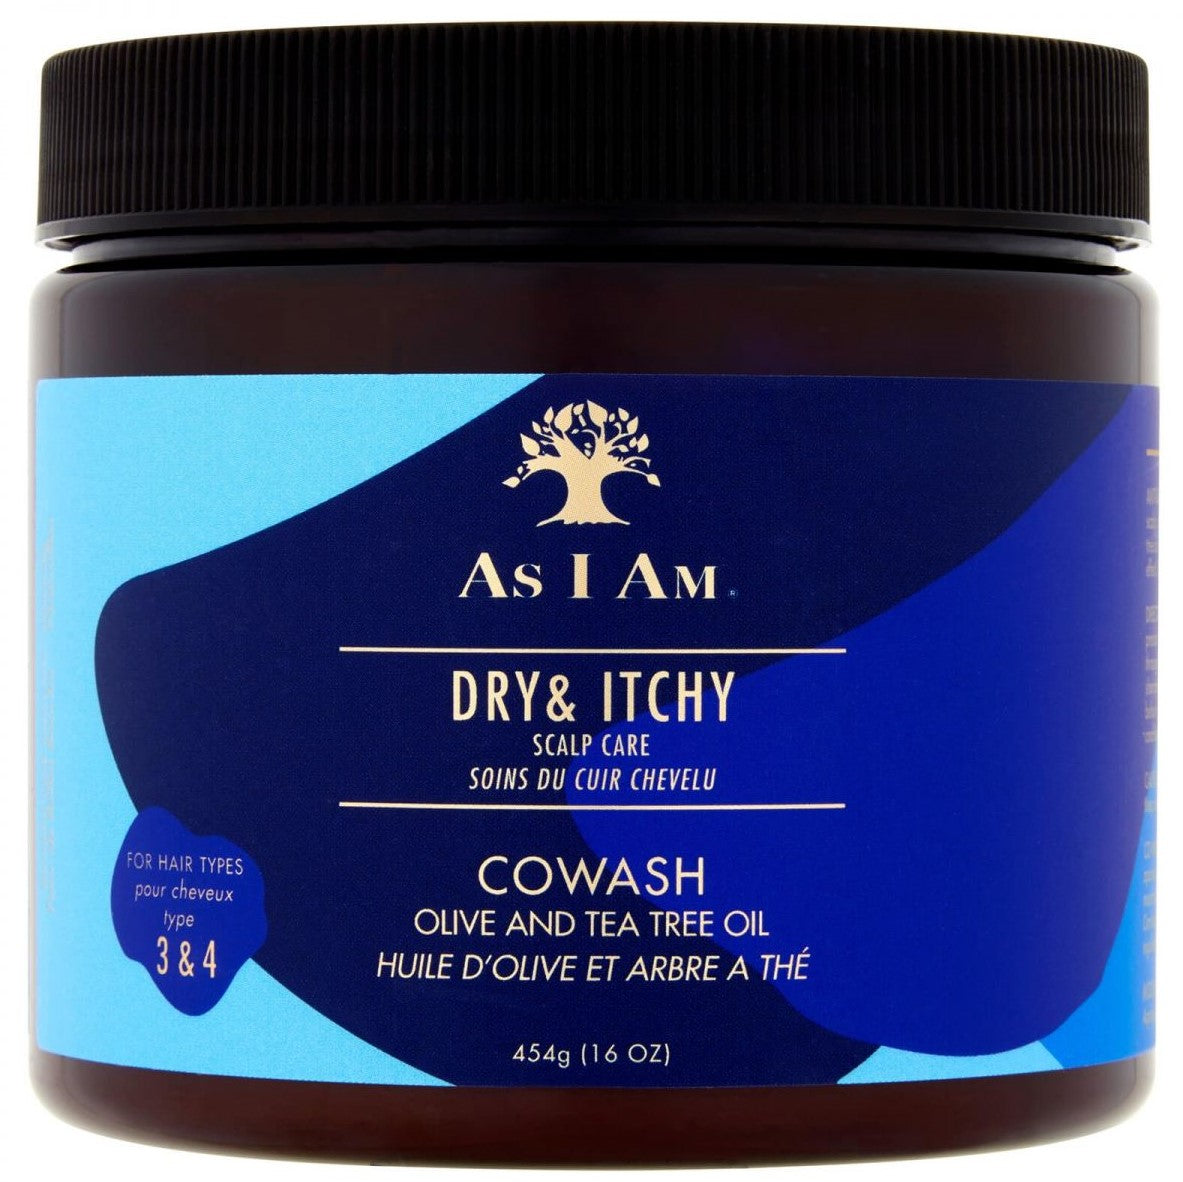 As I Am Dry and Itchy Scalp Care Olive and Tea Tree Oil Co-Wash 454g - Effektiv hovedbundspleje